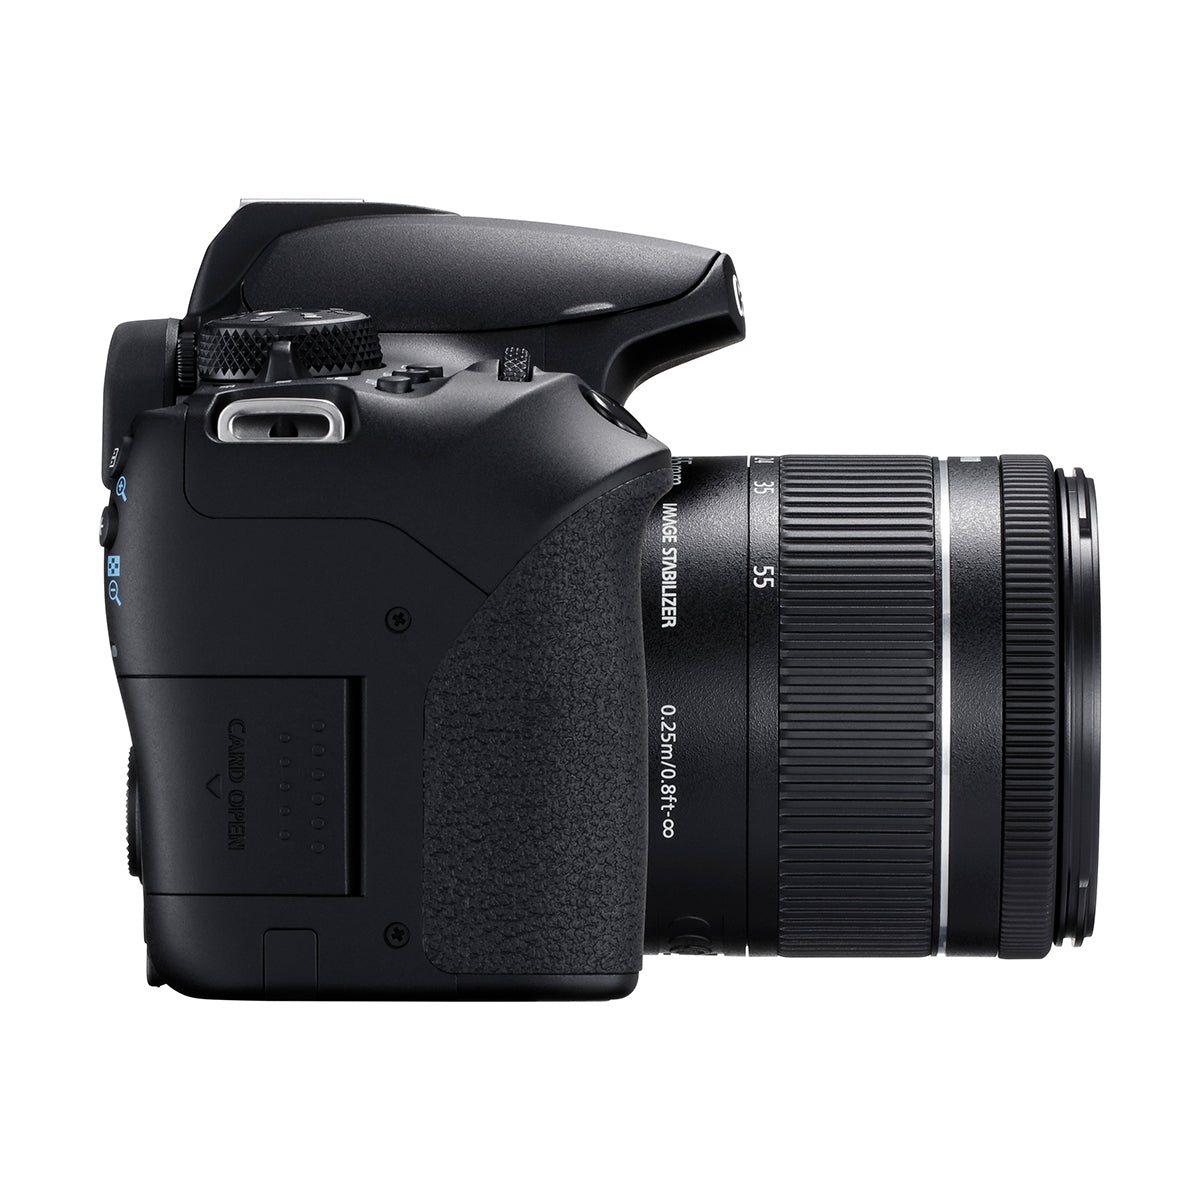 Canon EOS Rebel T8i DSLR 18-55mm IS STM Camera Kit